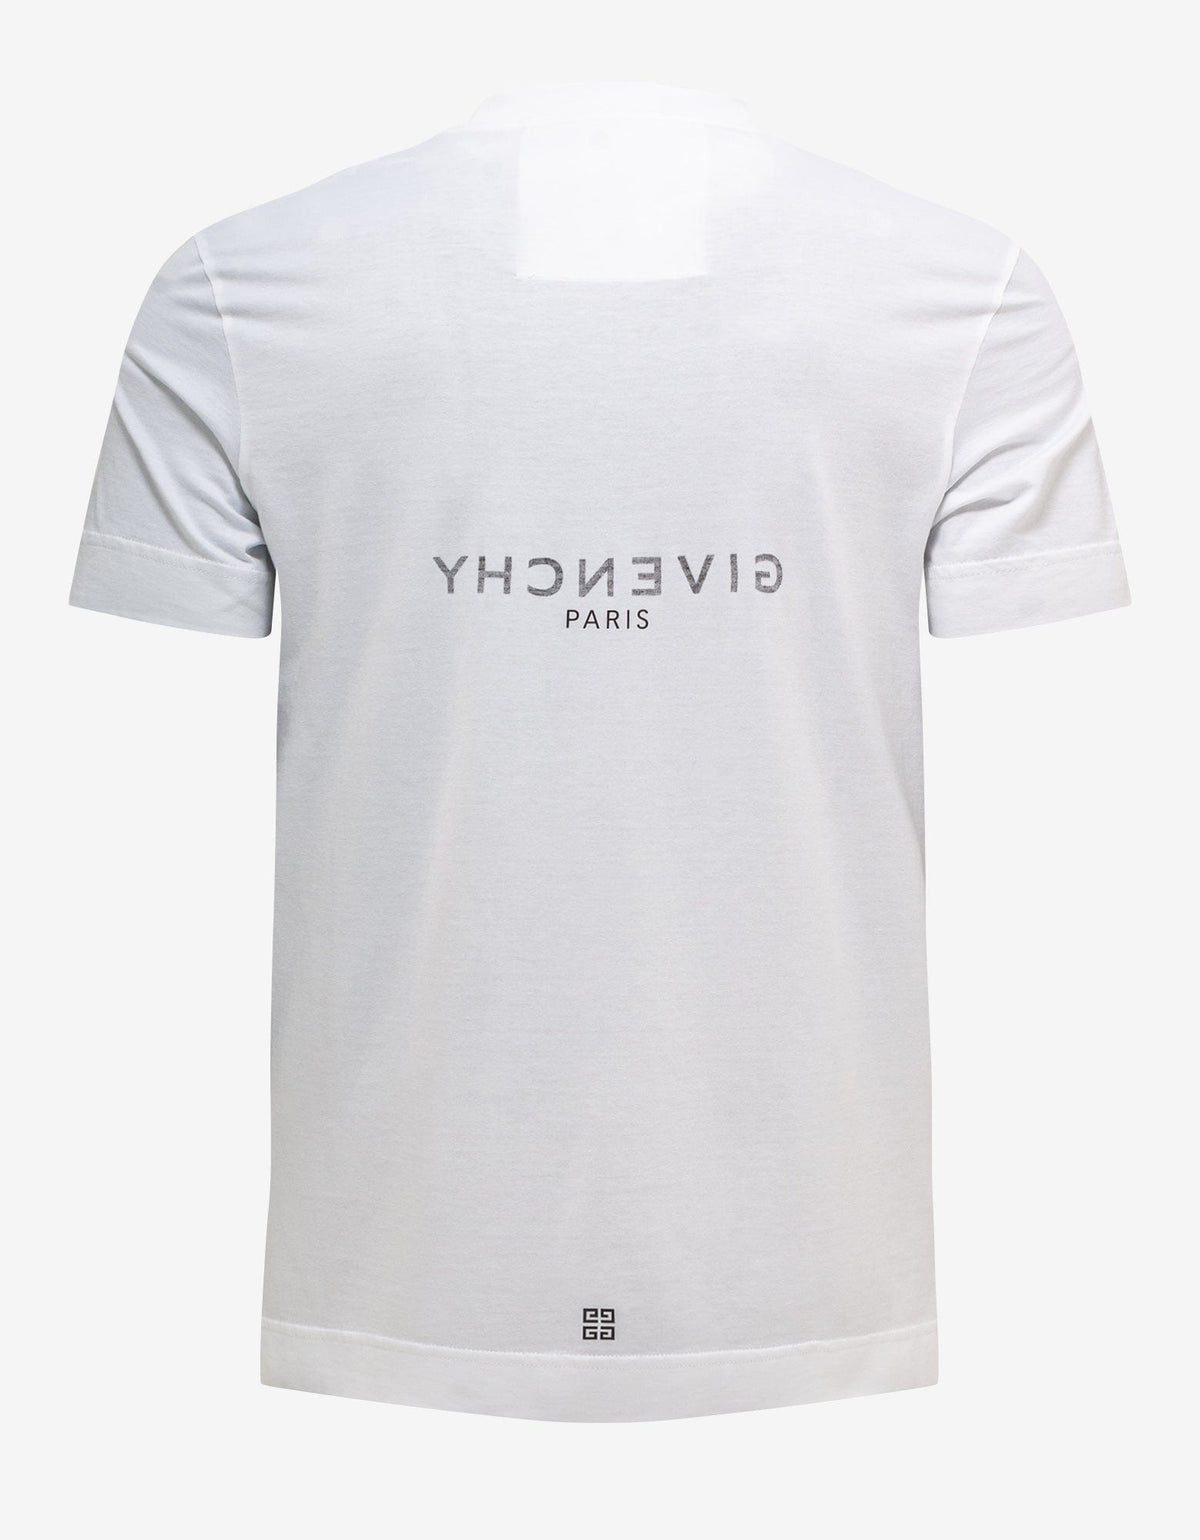 Givenchy White Reverse Logo T-Shirt